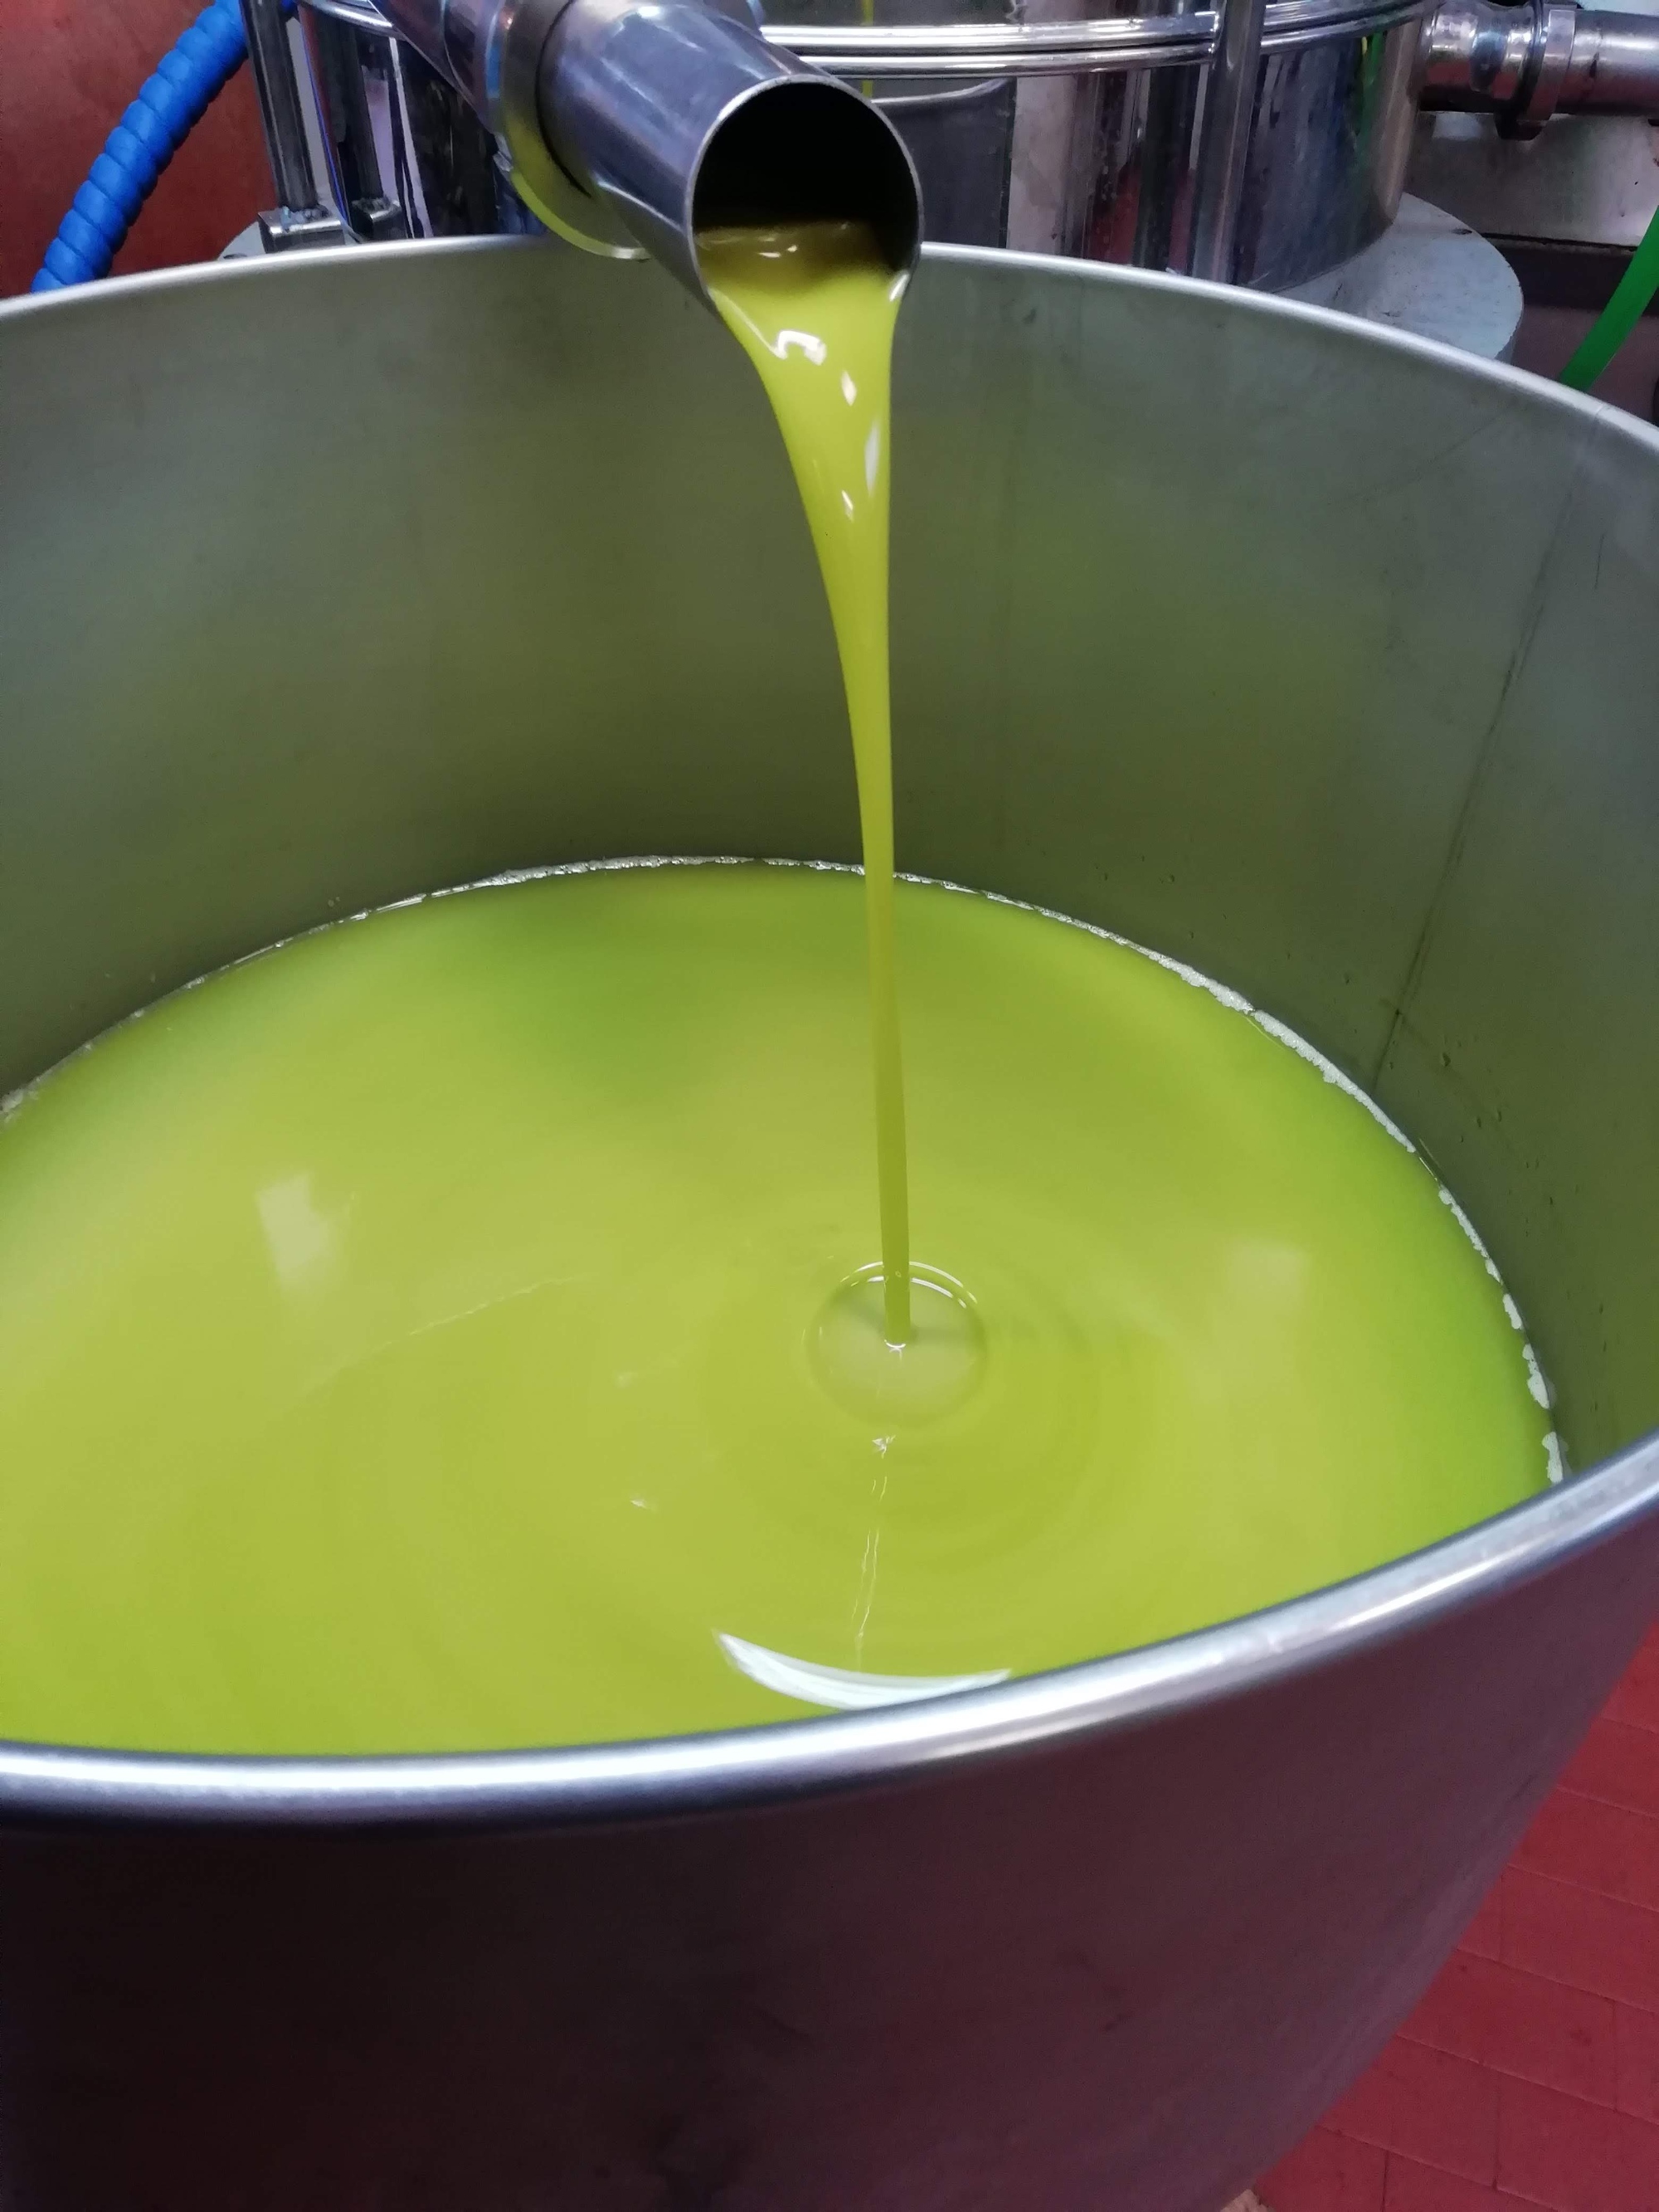 The extra-virgin olive oil of Reggello